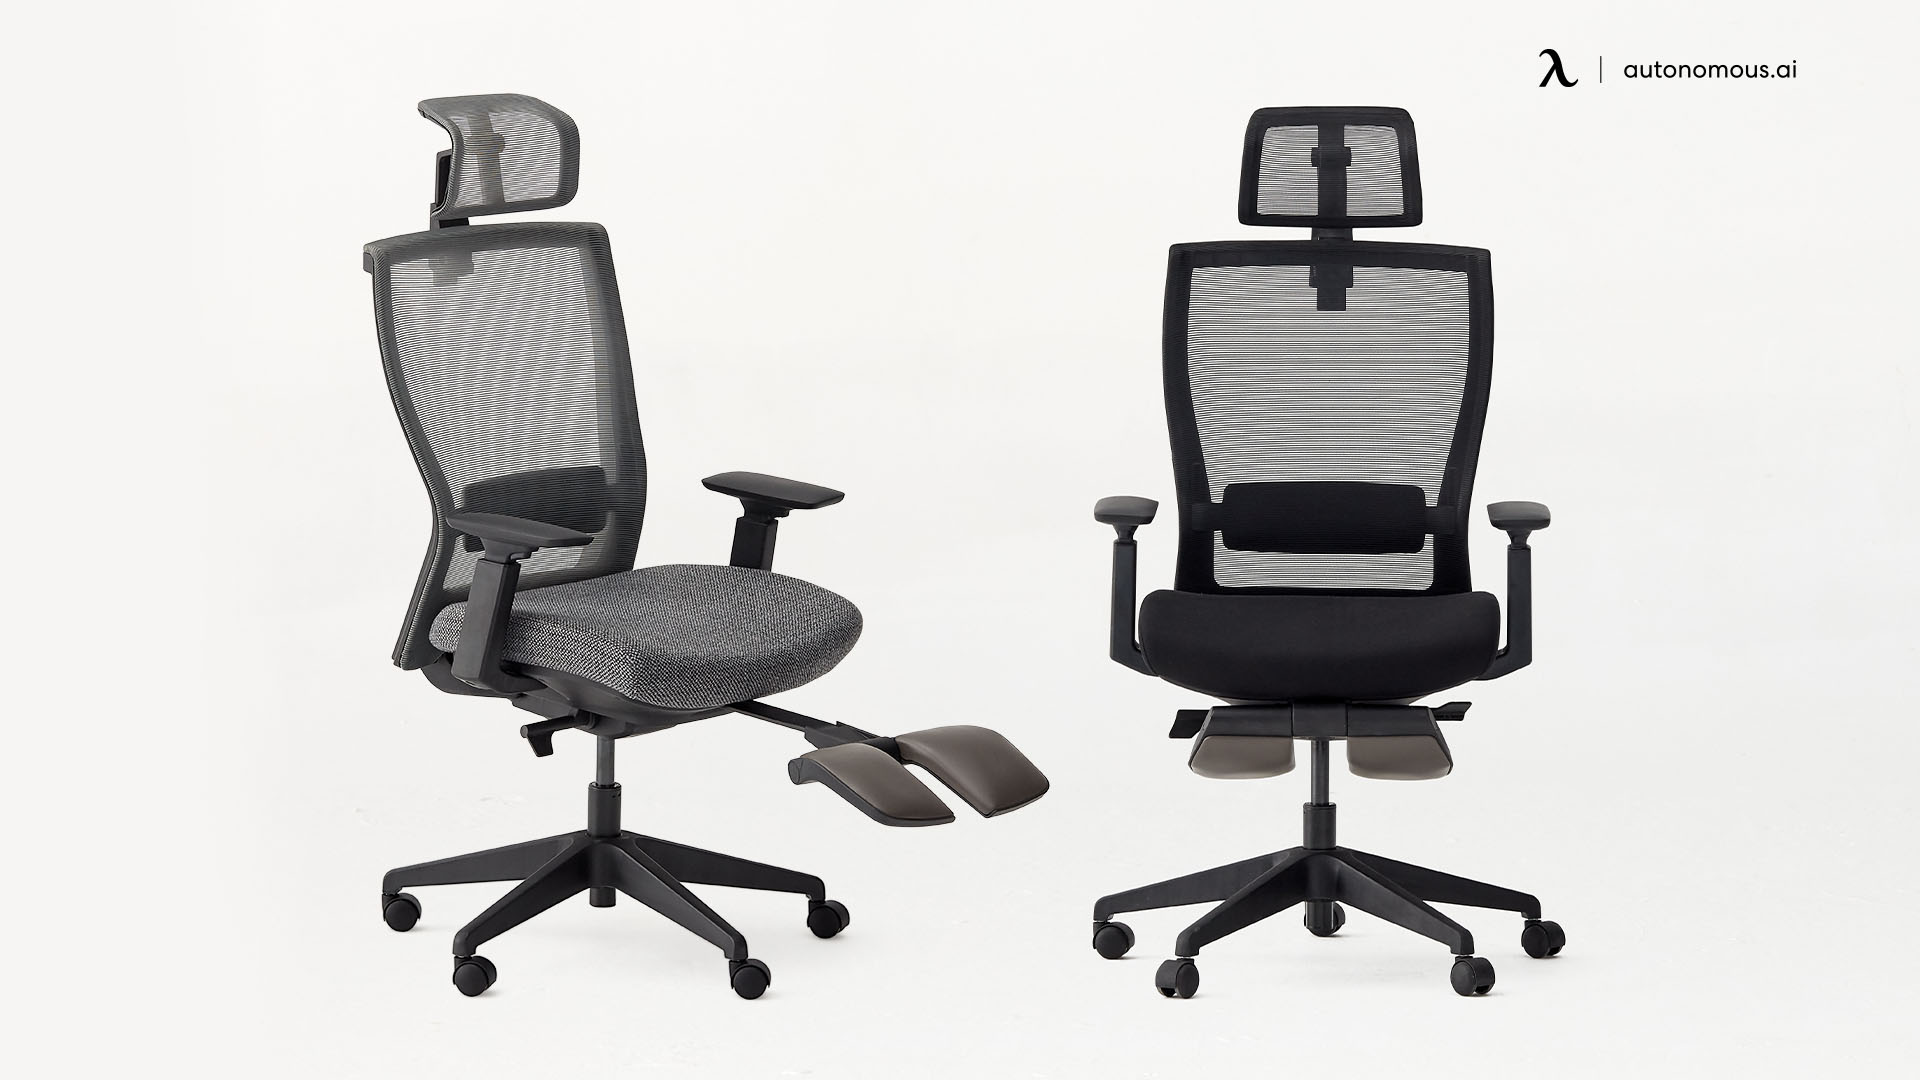 ErgoChair Recline office chair with back support